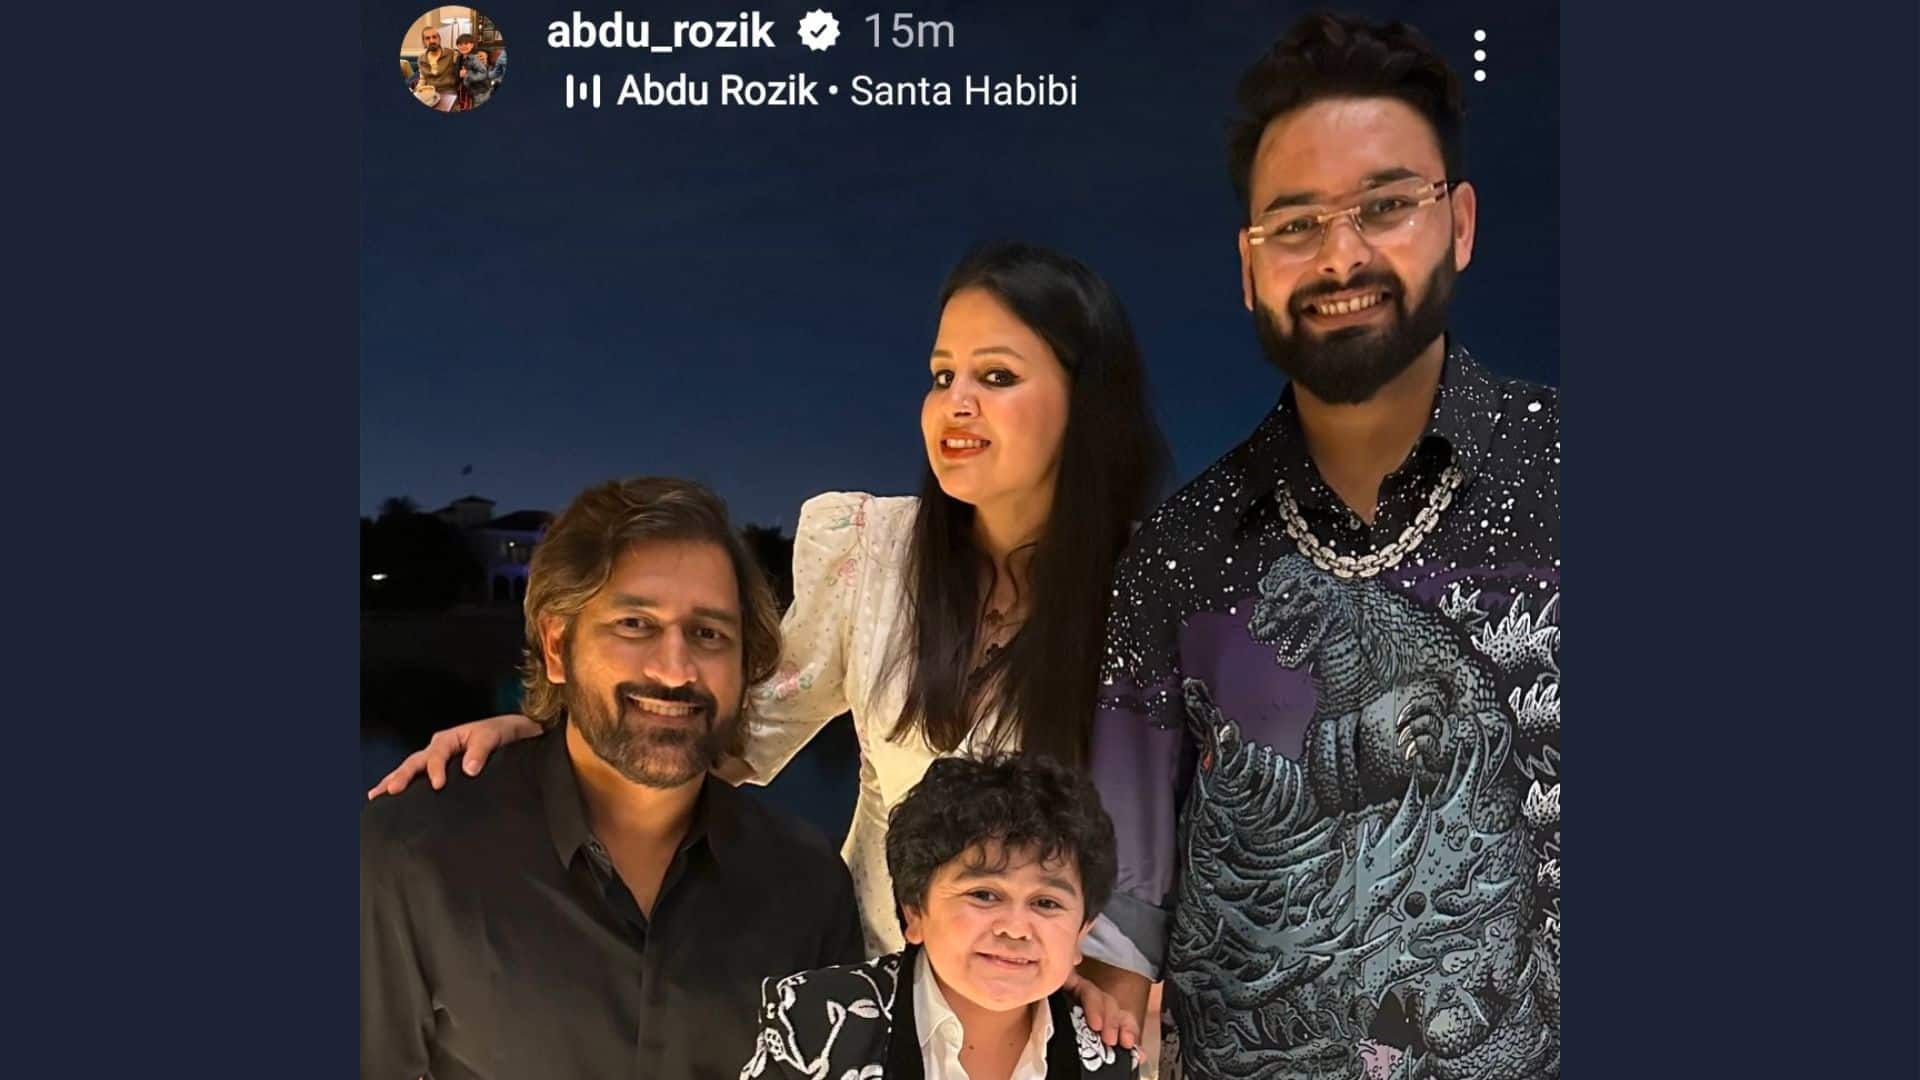 [In Pics] MS Dhoni, Rishabh Pant Party With Bigg Boss-Famed Adbu Rozik